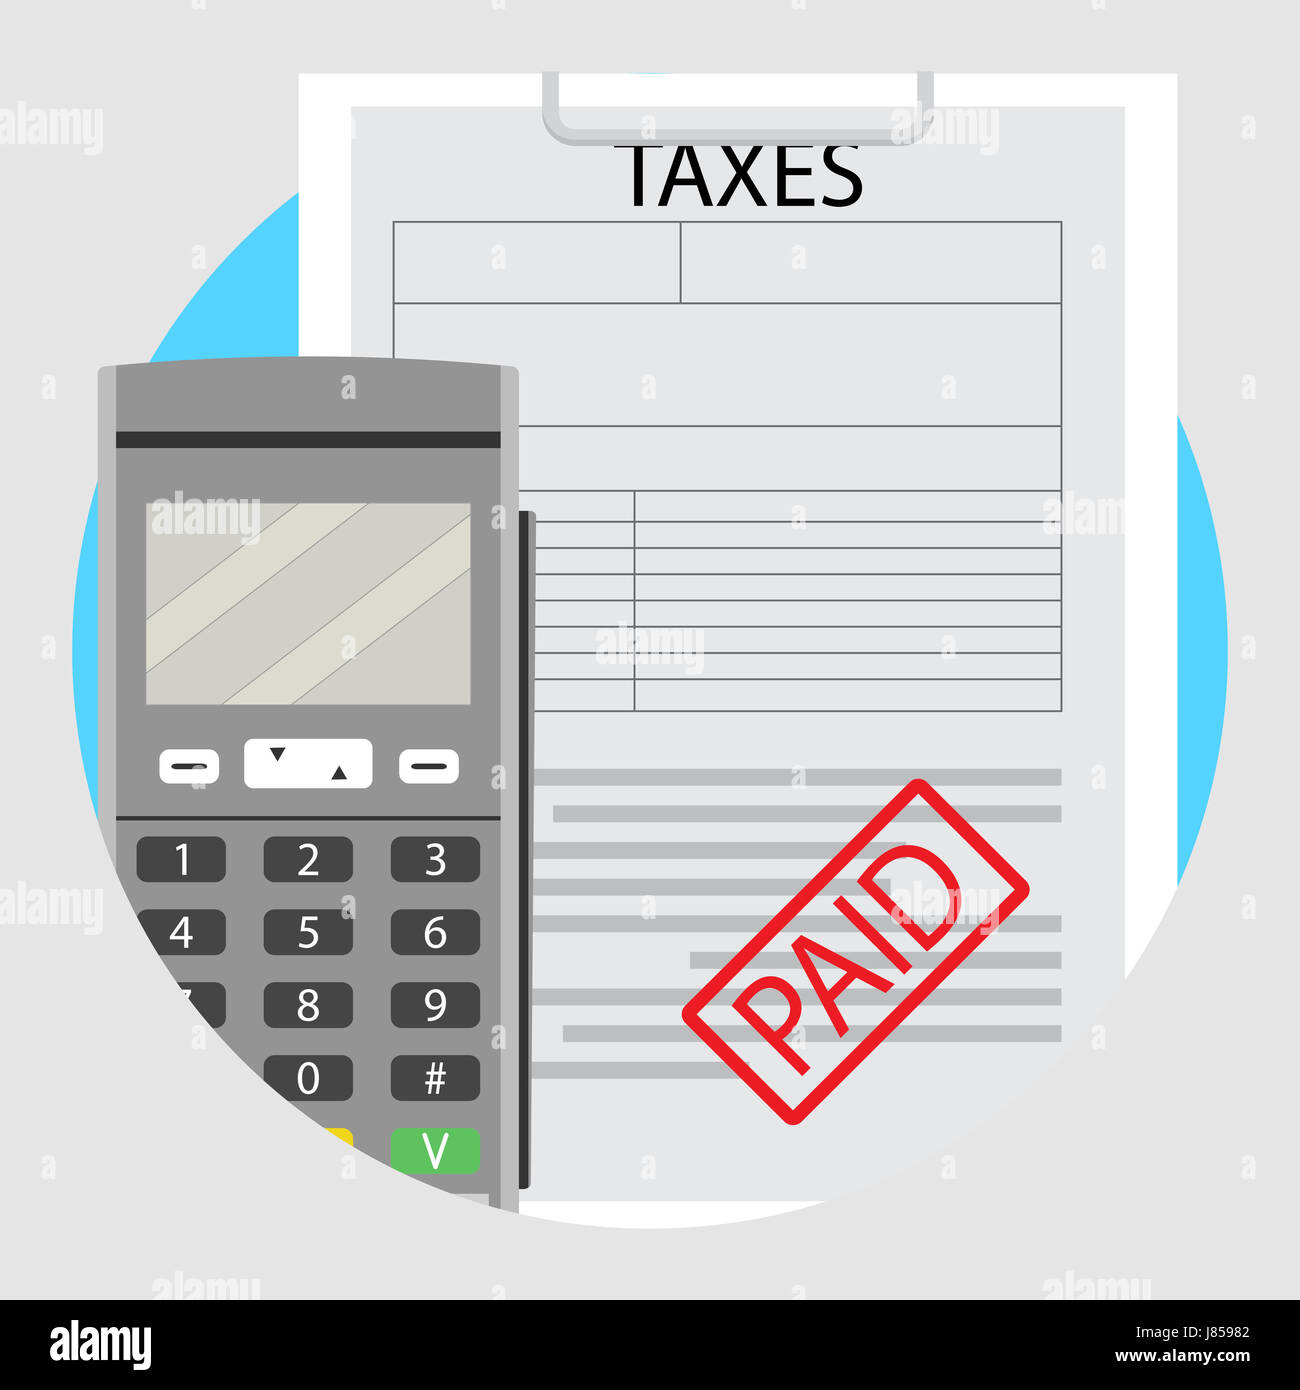 Symbole Steuern gezahlt. Besteuerung und Balance bezahlt, Vektor-illustration Stockfoto